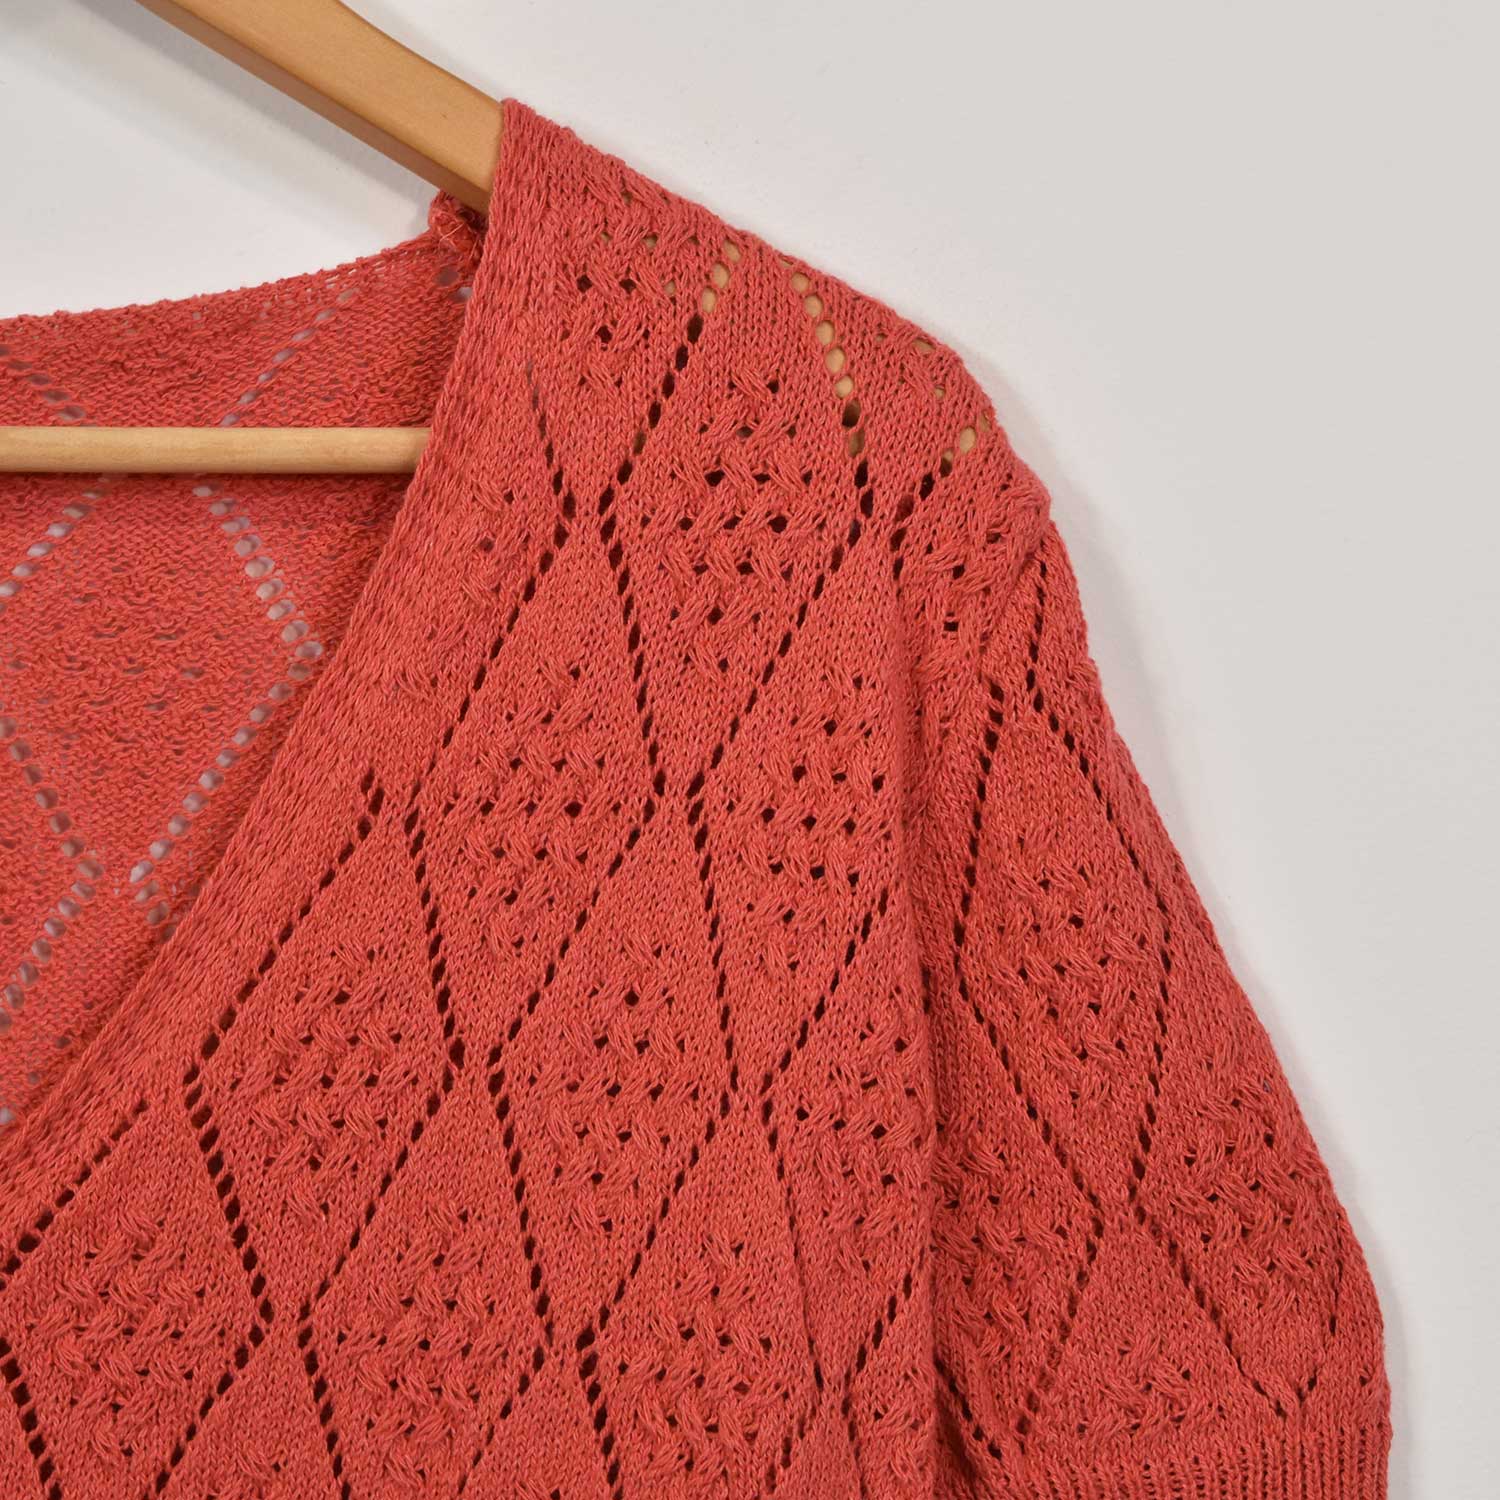 Red crochet bolero